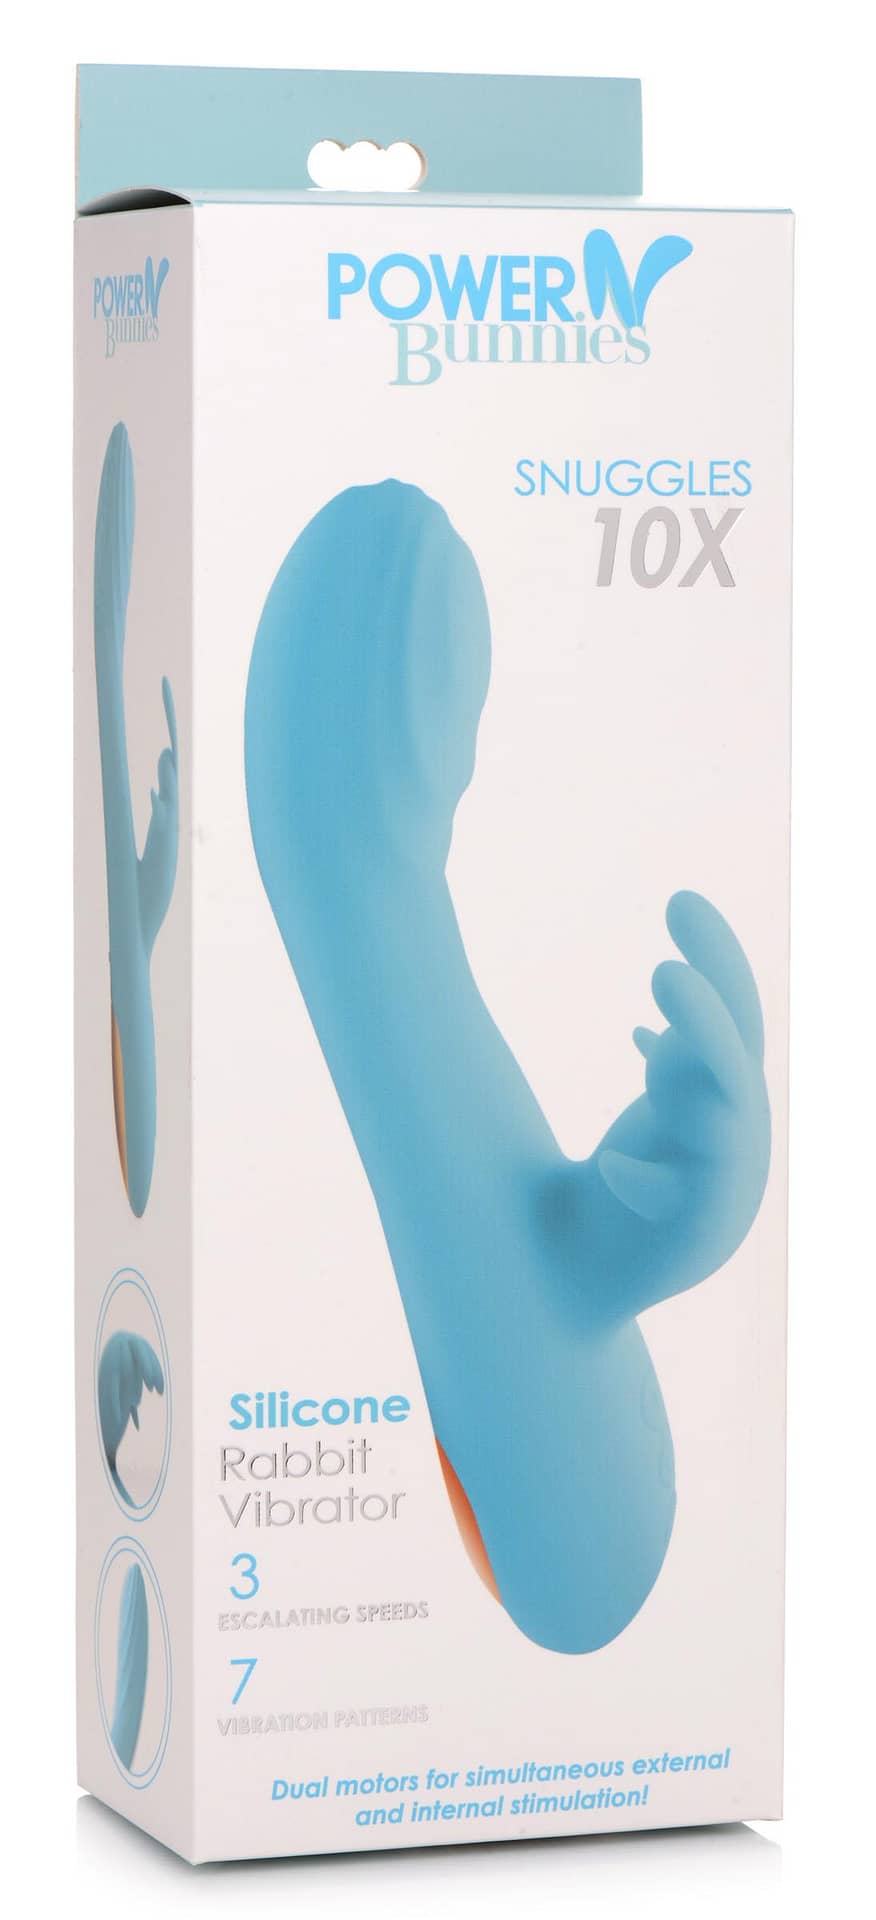 Snuggles 10x Silicone Rabbit Vibrator – The Bdsm Toy Shop